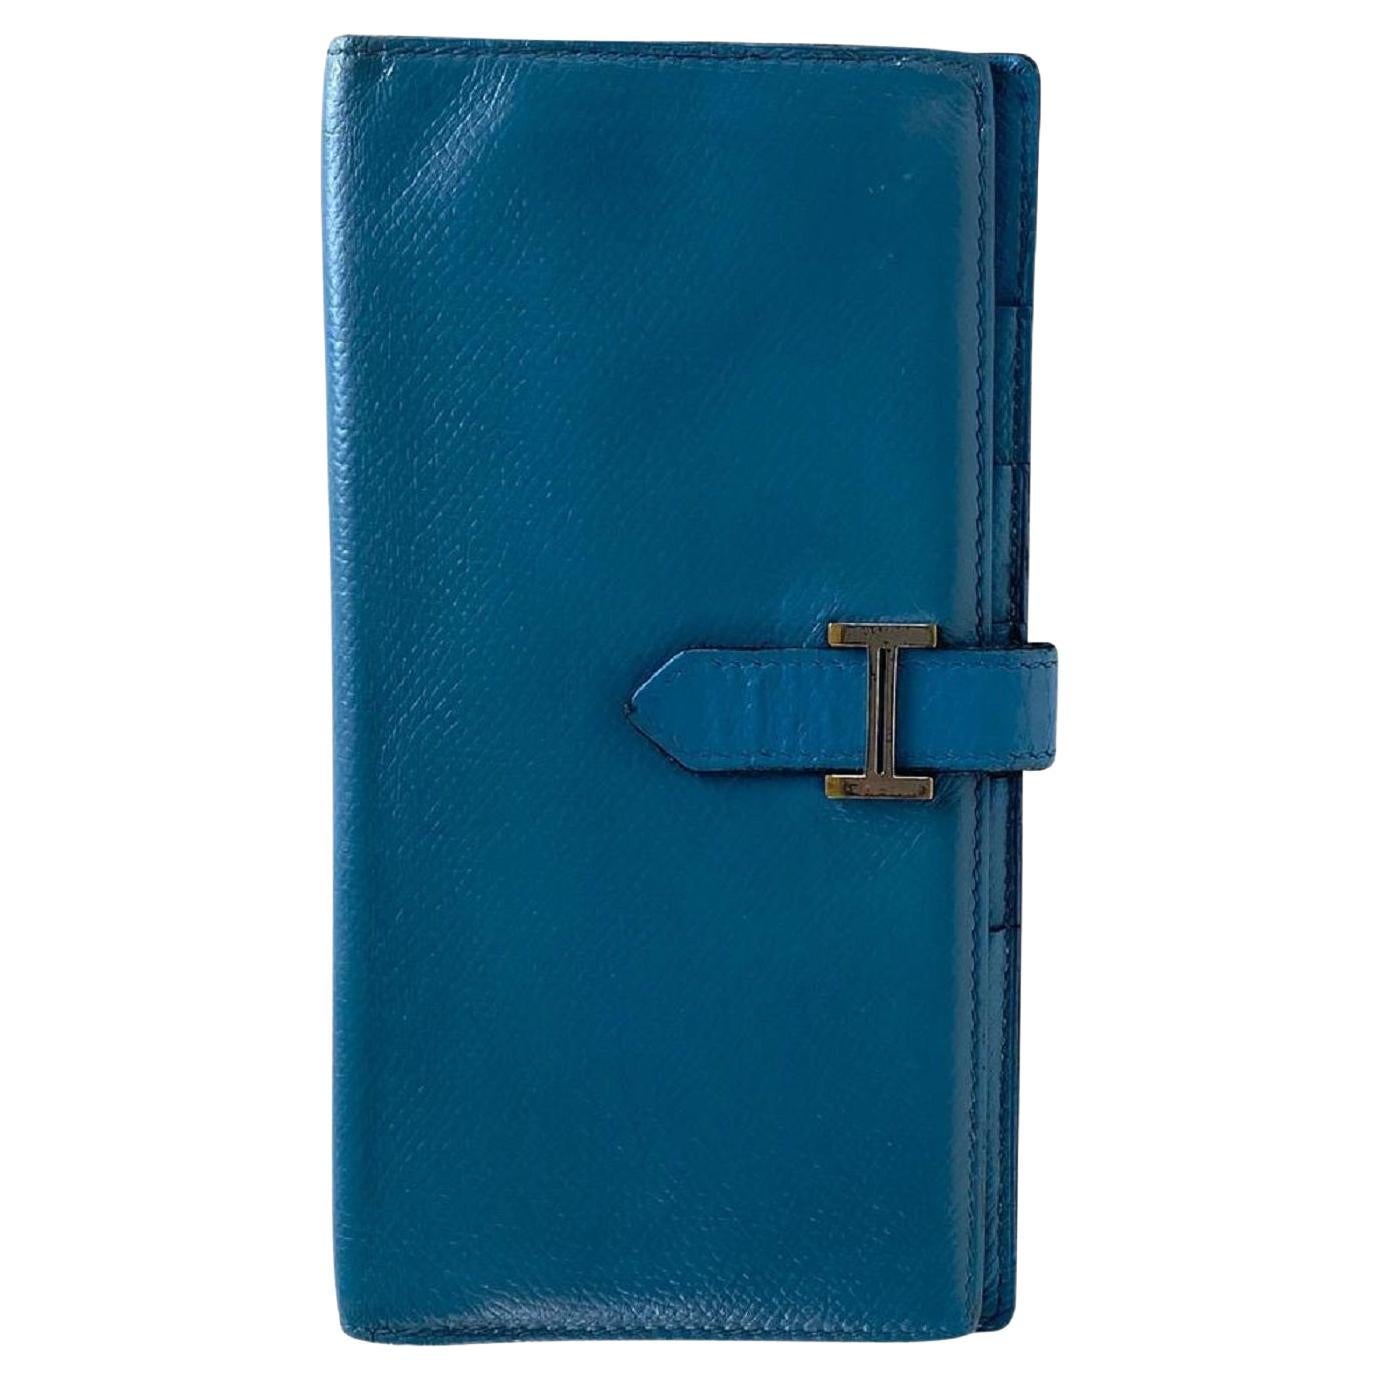 Hermès Jean Bearn Brieftasche Bifold Lang 11h68 Blaue Leder Clutch